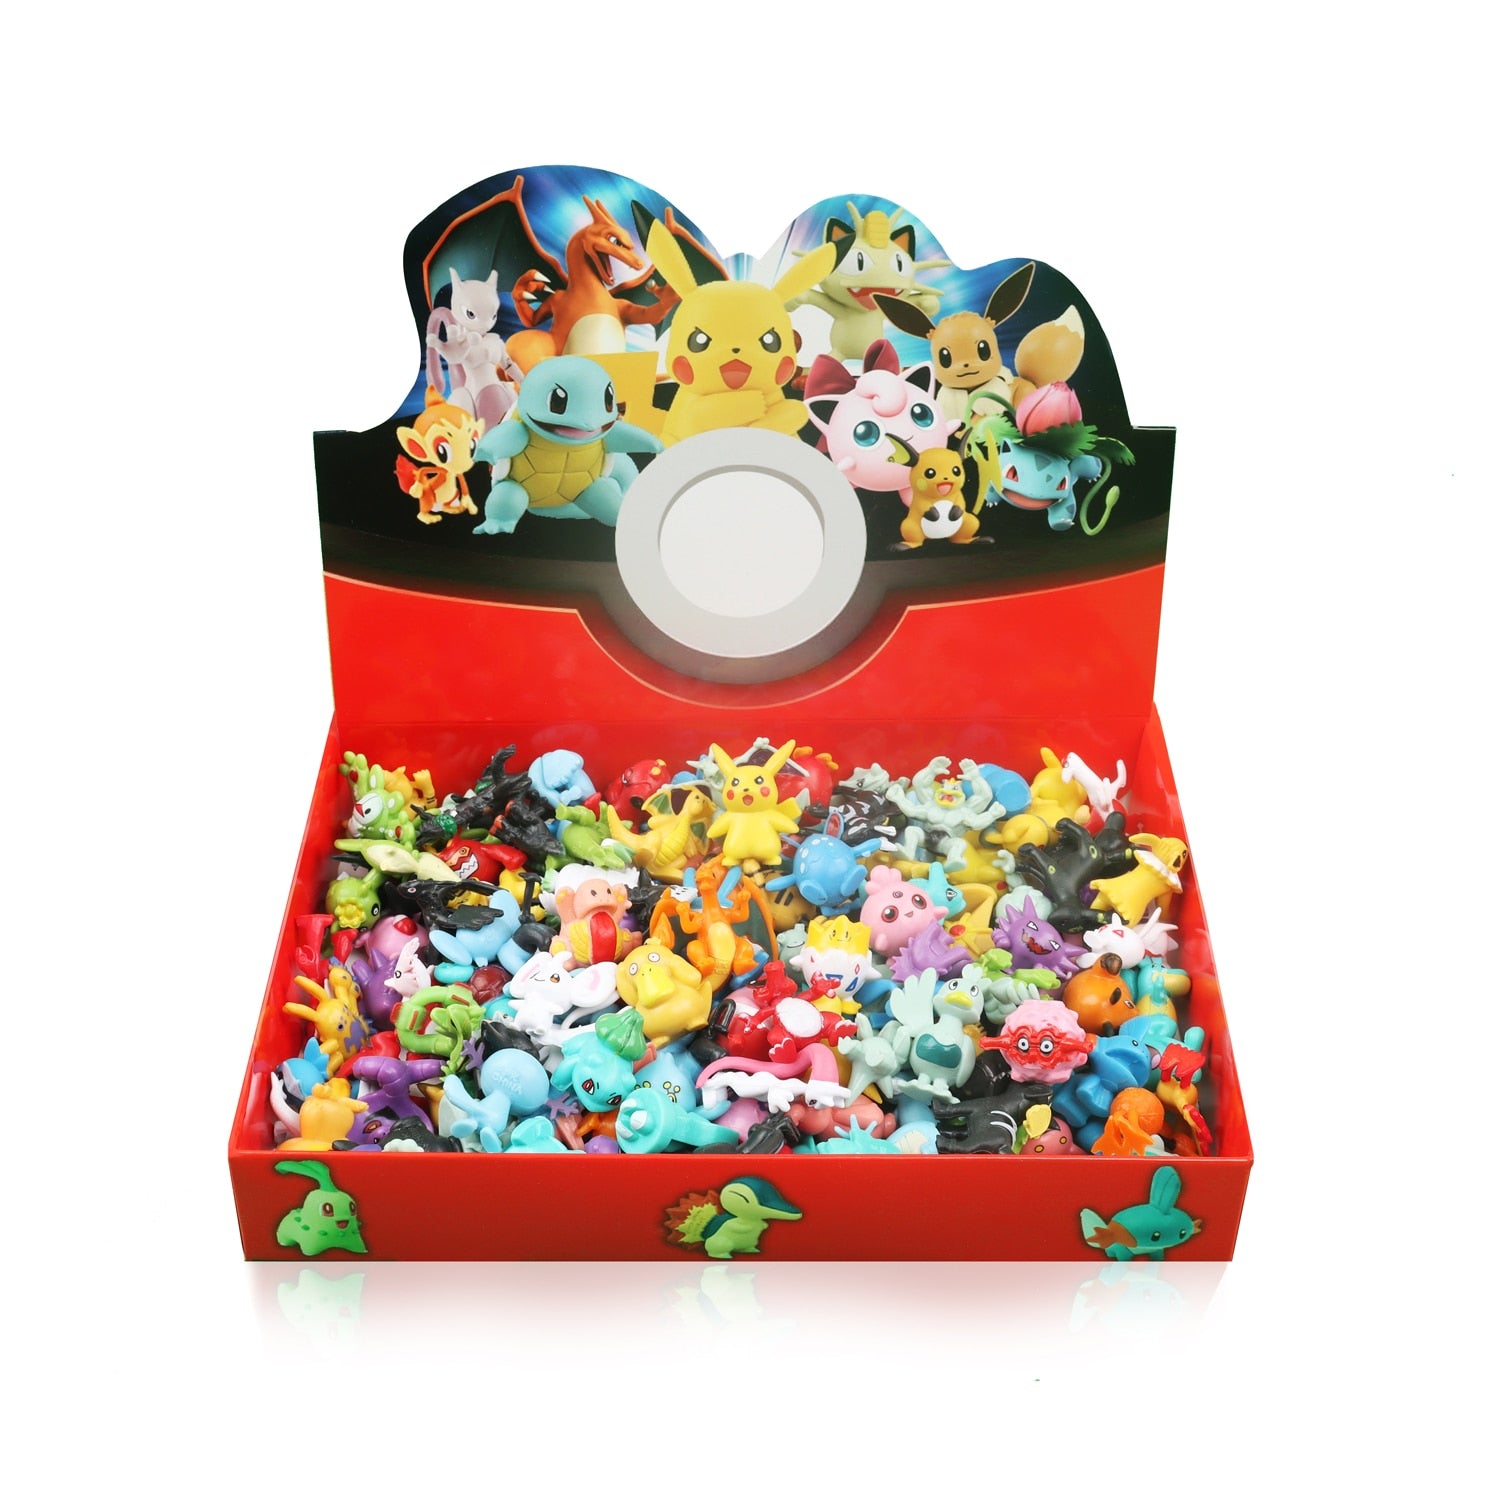 Pokemon Gift Box Action Figure 24-144 PCS